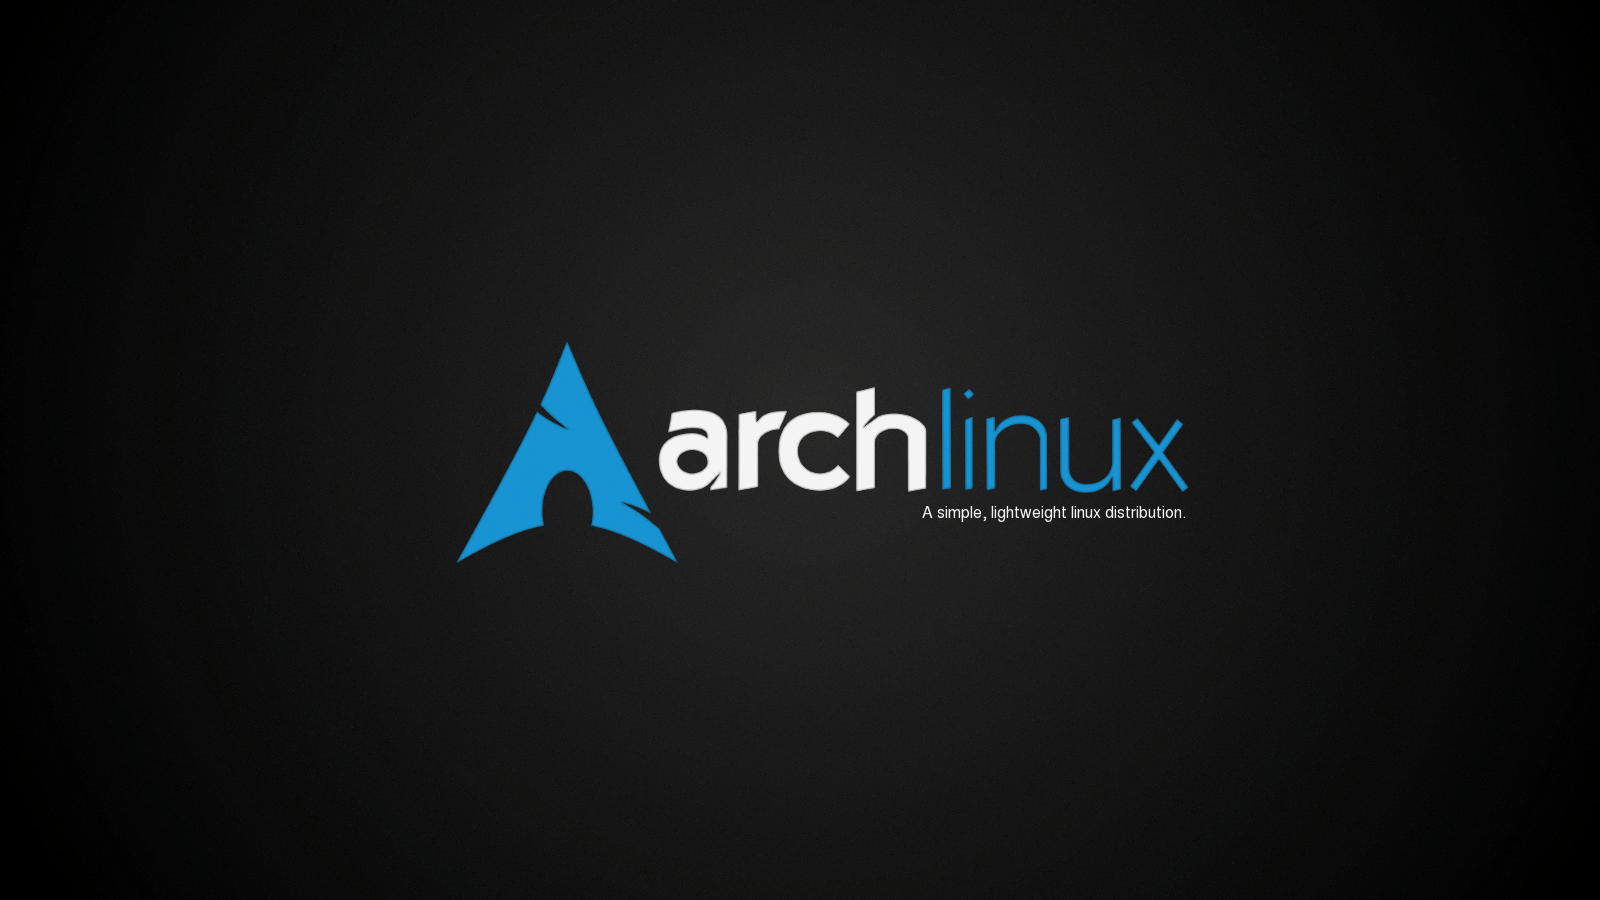 linux blackarch logo png